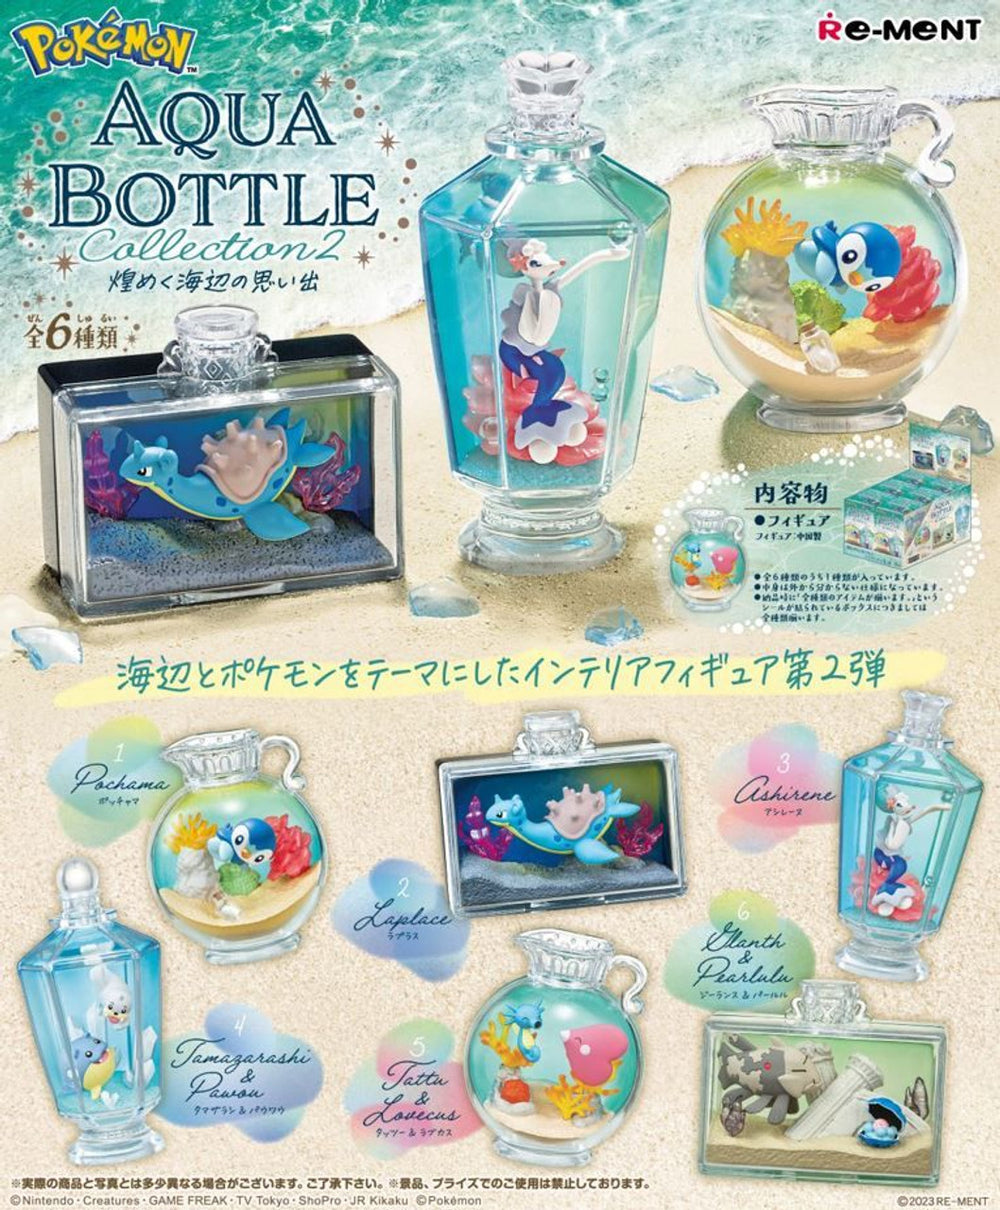 Pokemon Aqua Bottle Vol. 2 Rement